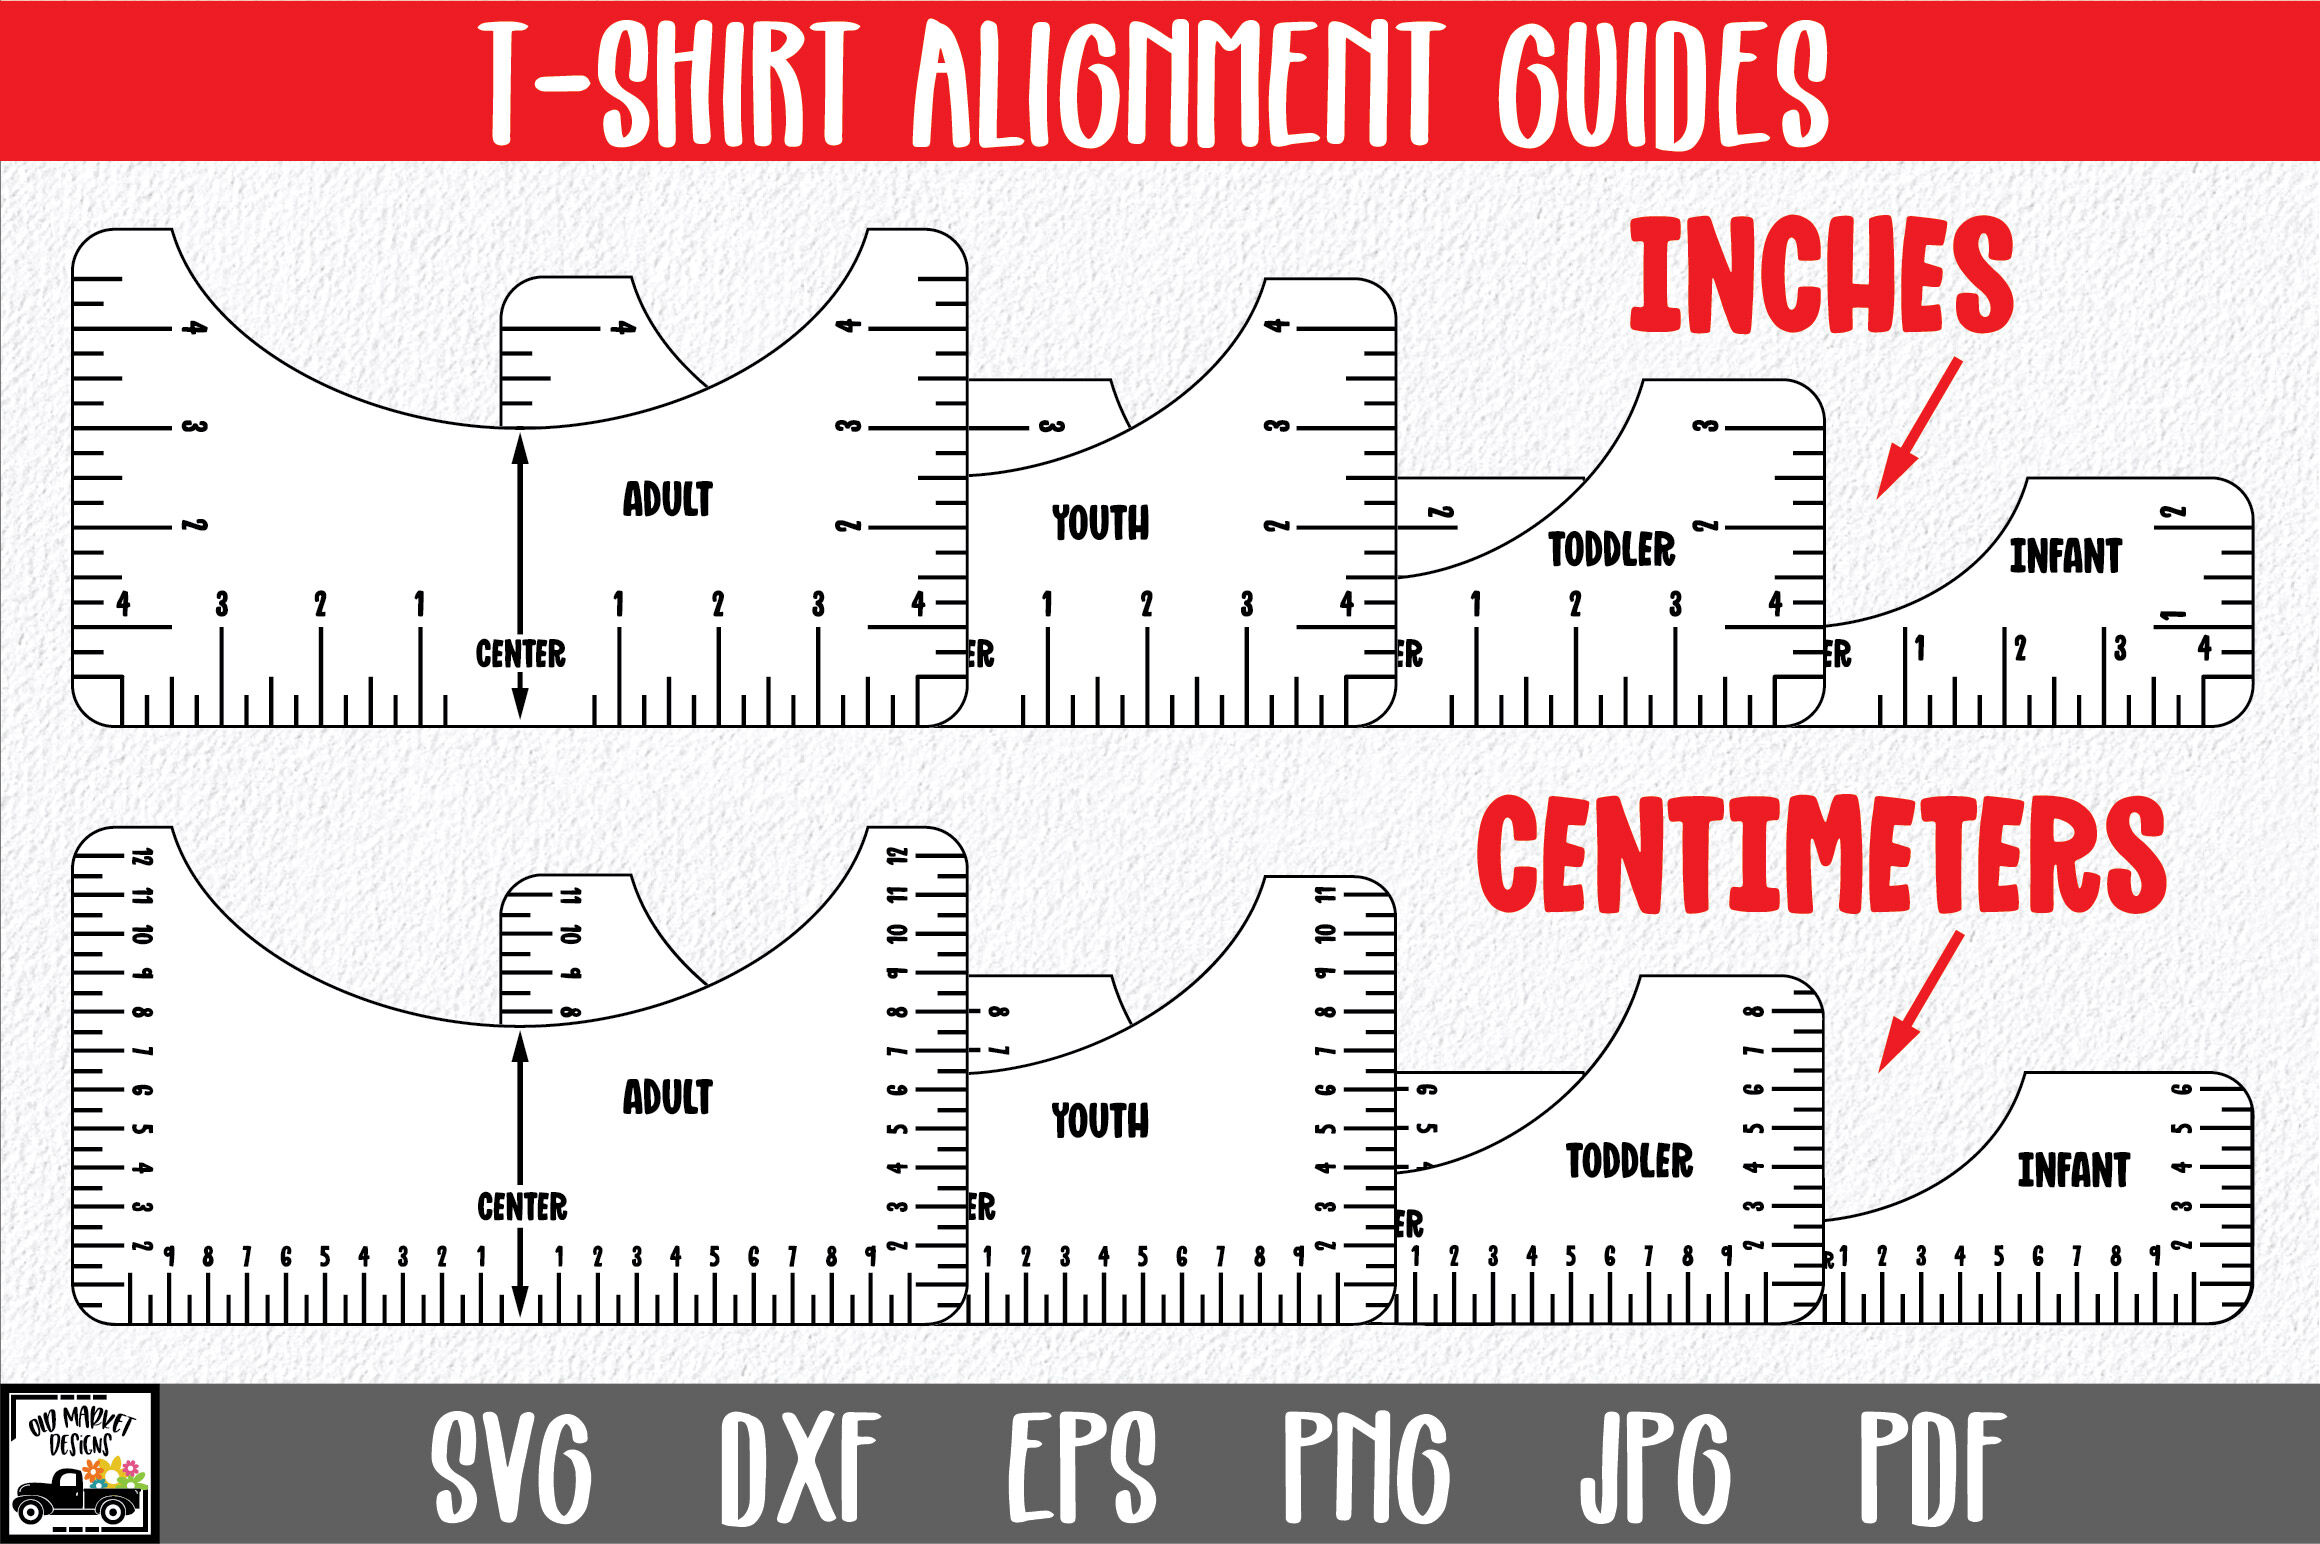 ori 3887263 dp34nrn6gs5kvevtm5szj7n4wv9leiqccxtzdvbs t shirt alignment guide inches and centimeters shirt tool